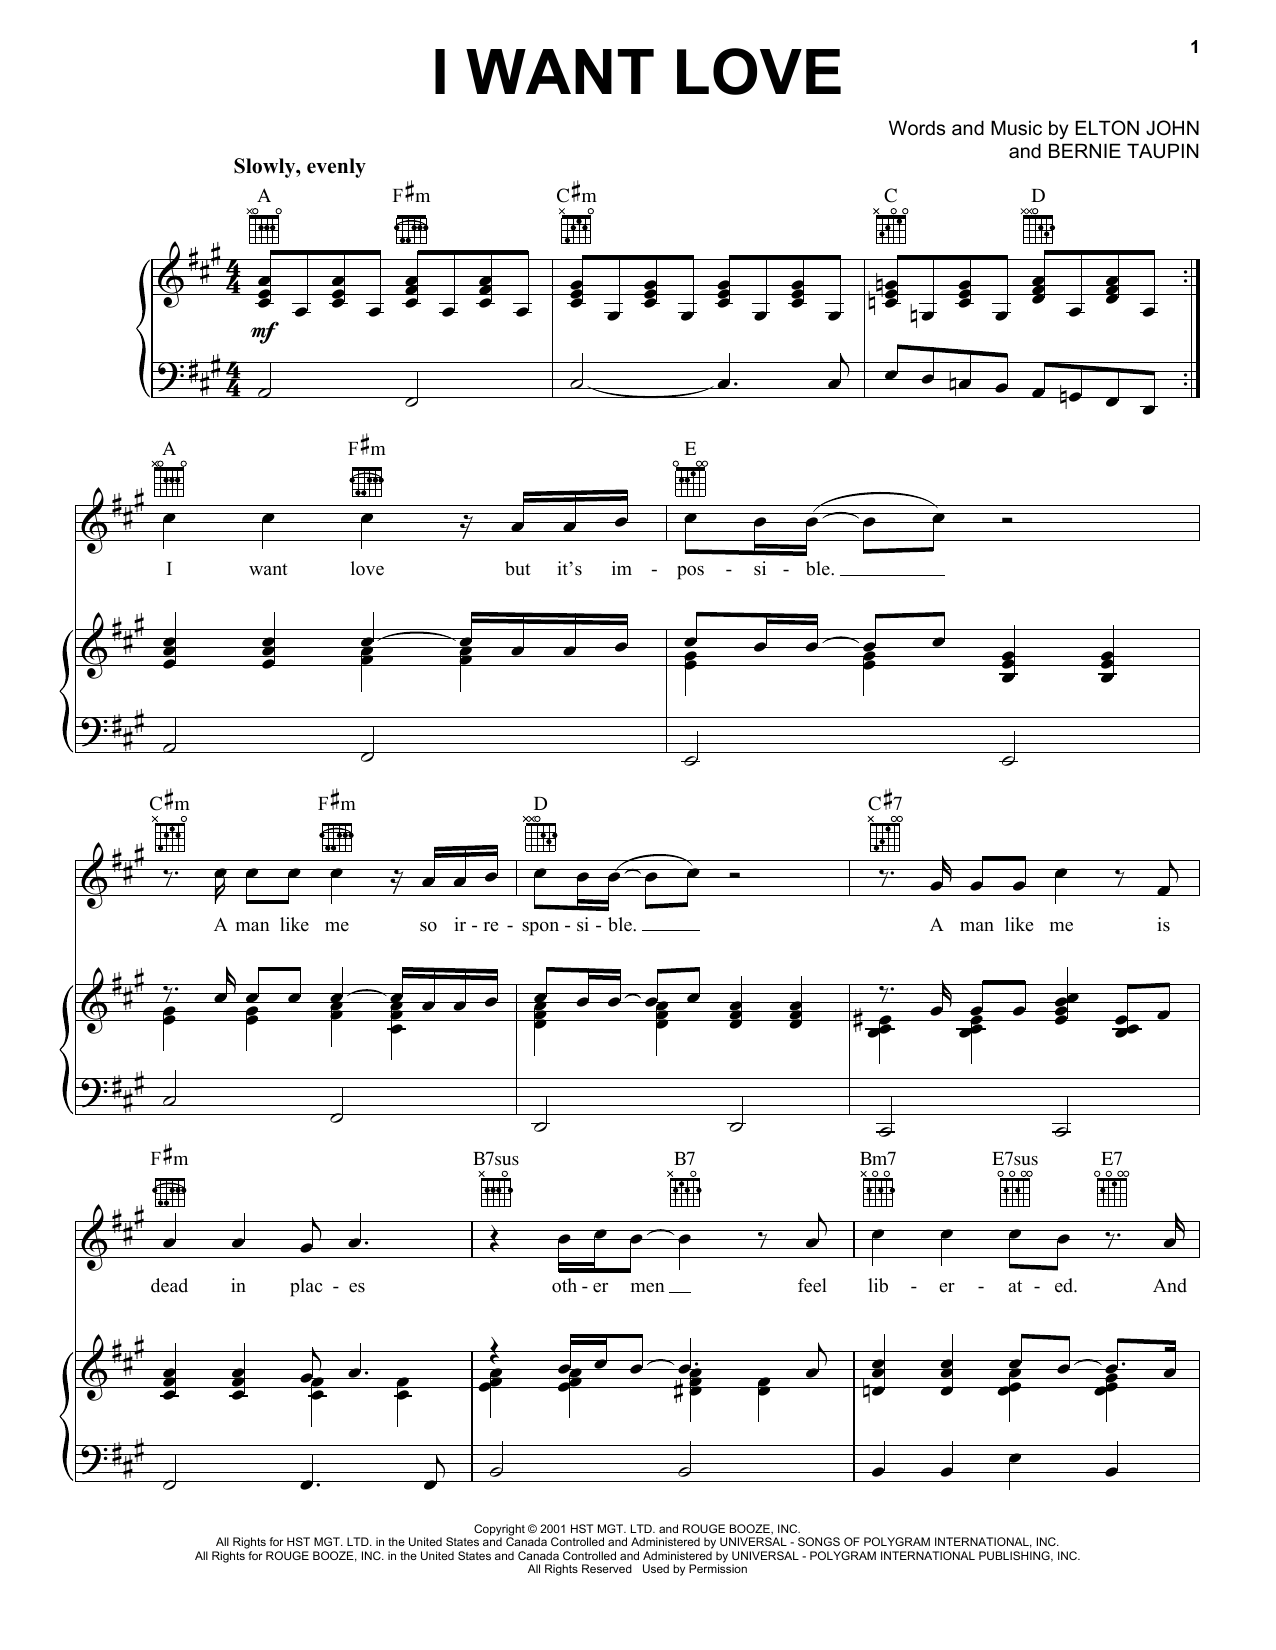 Elton John I Want Love Sheet Music Notes & Chords for Easy Guitar Tab - Download or Print PDF